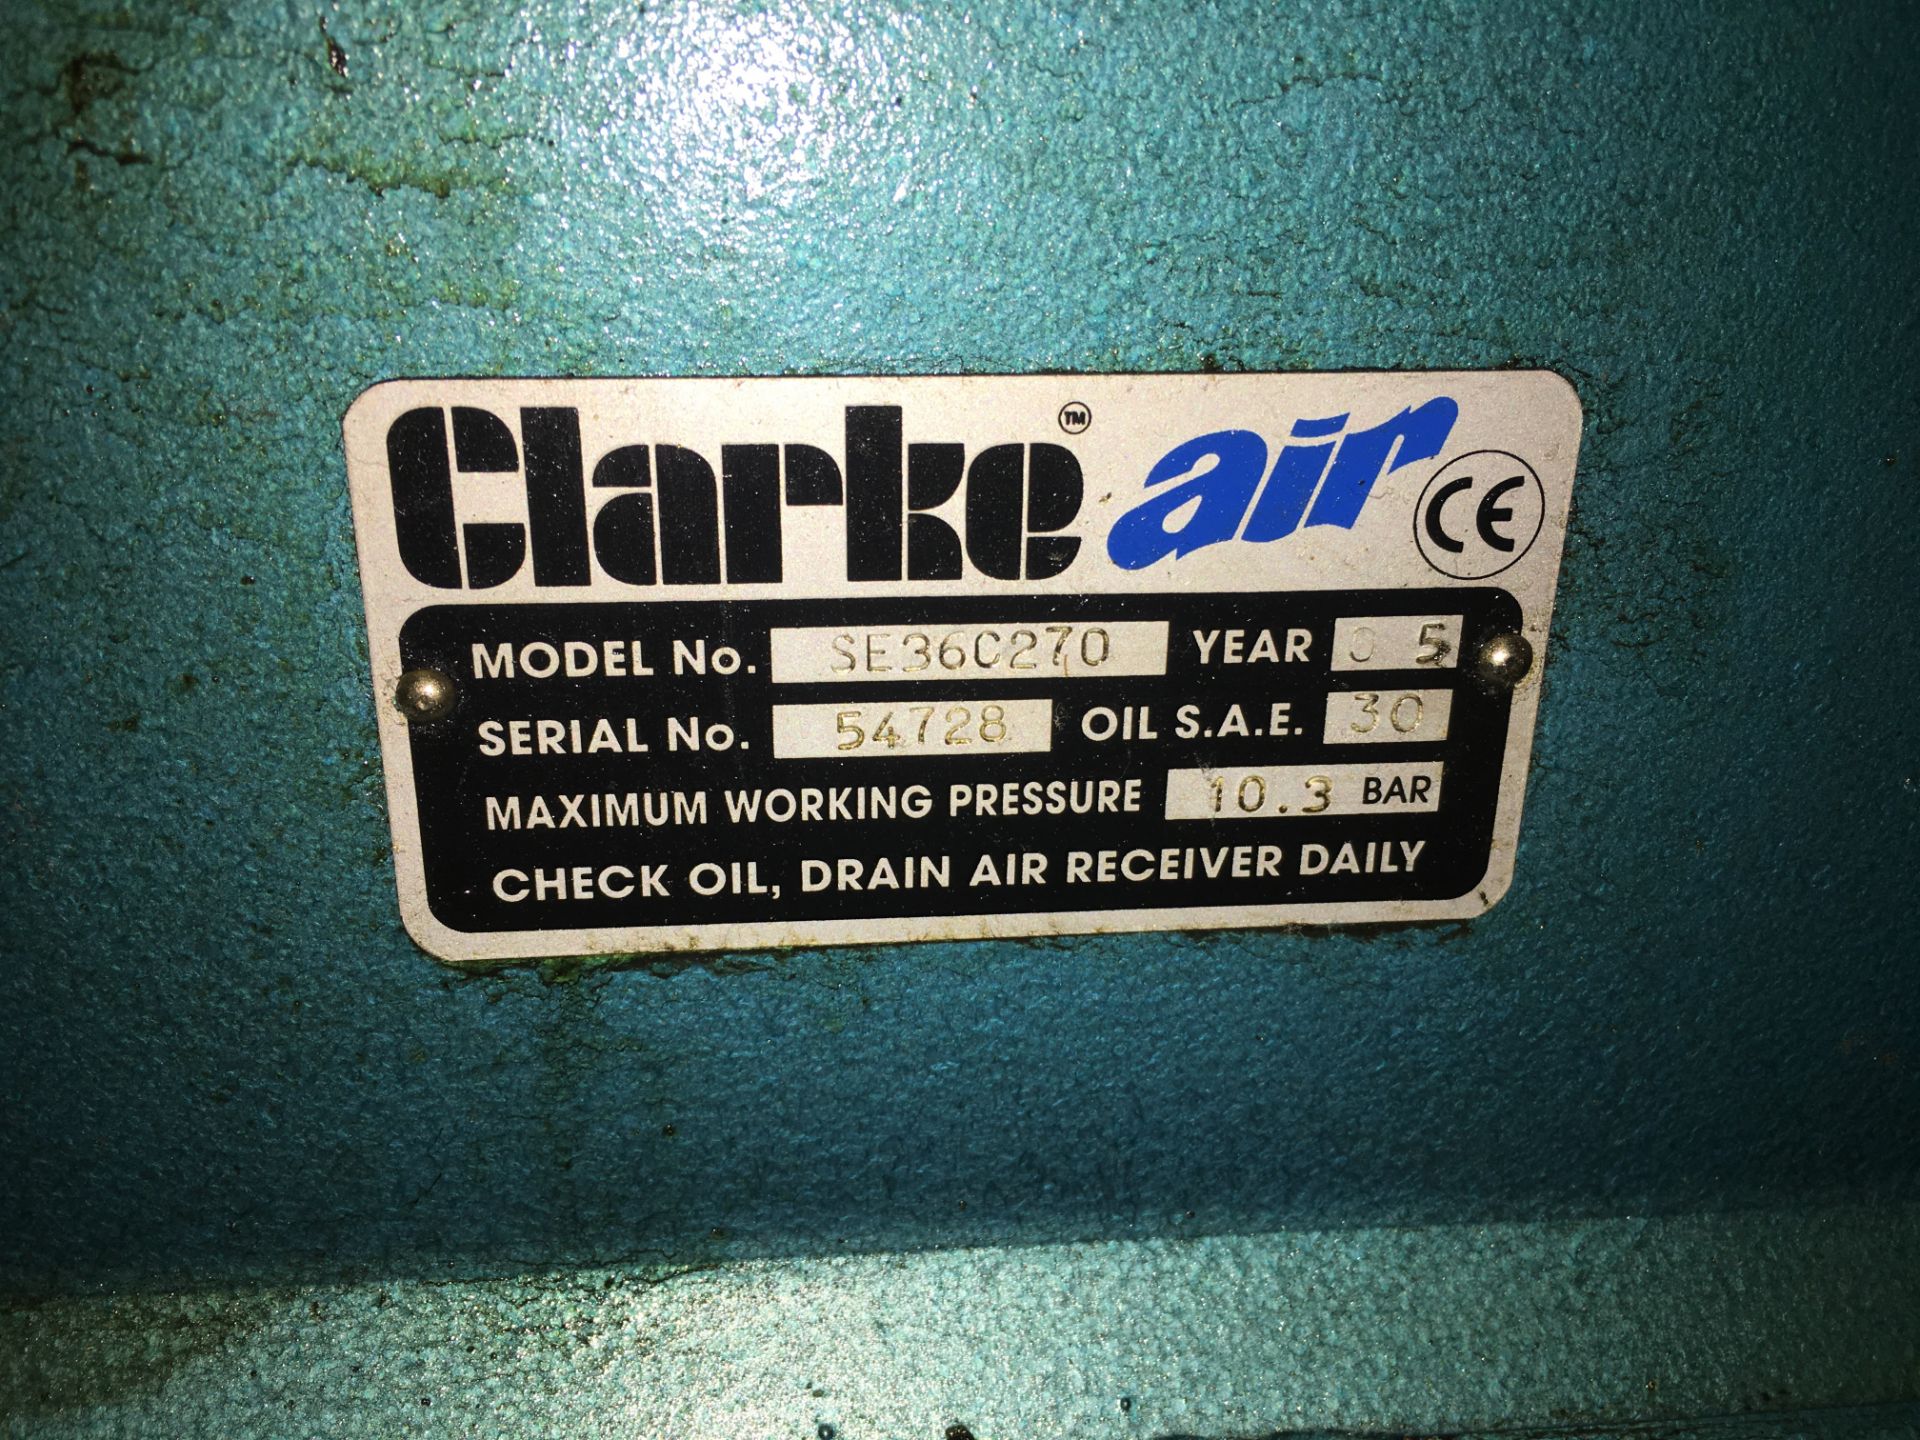 ClarkeAir Industrial Air Compressor - Image 4 of 7